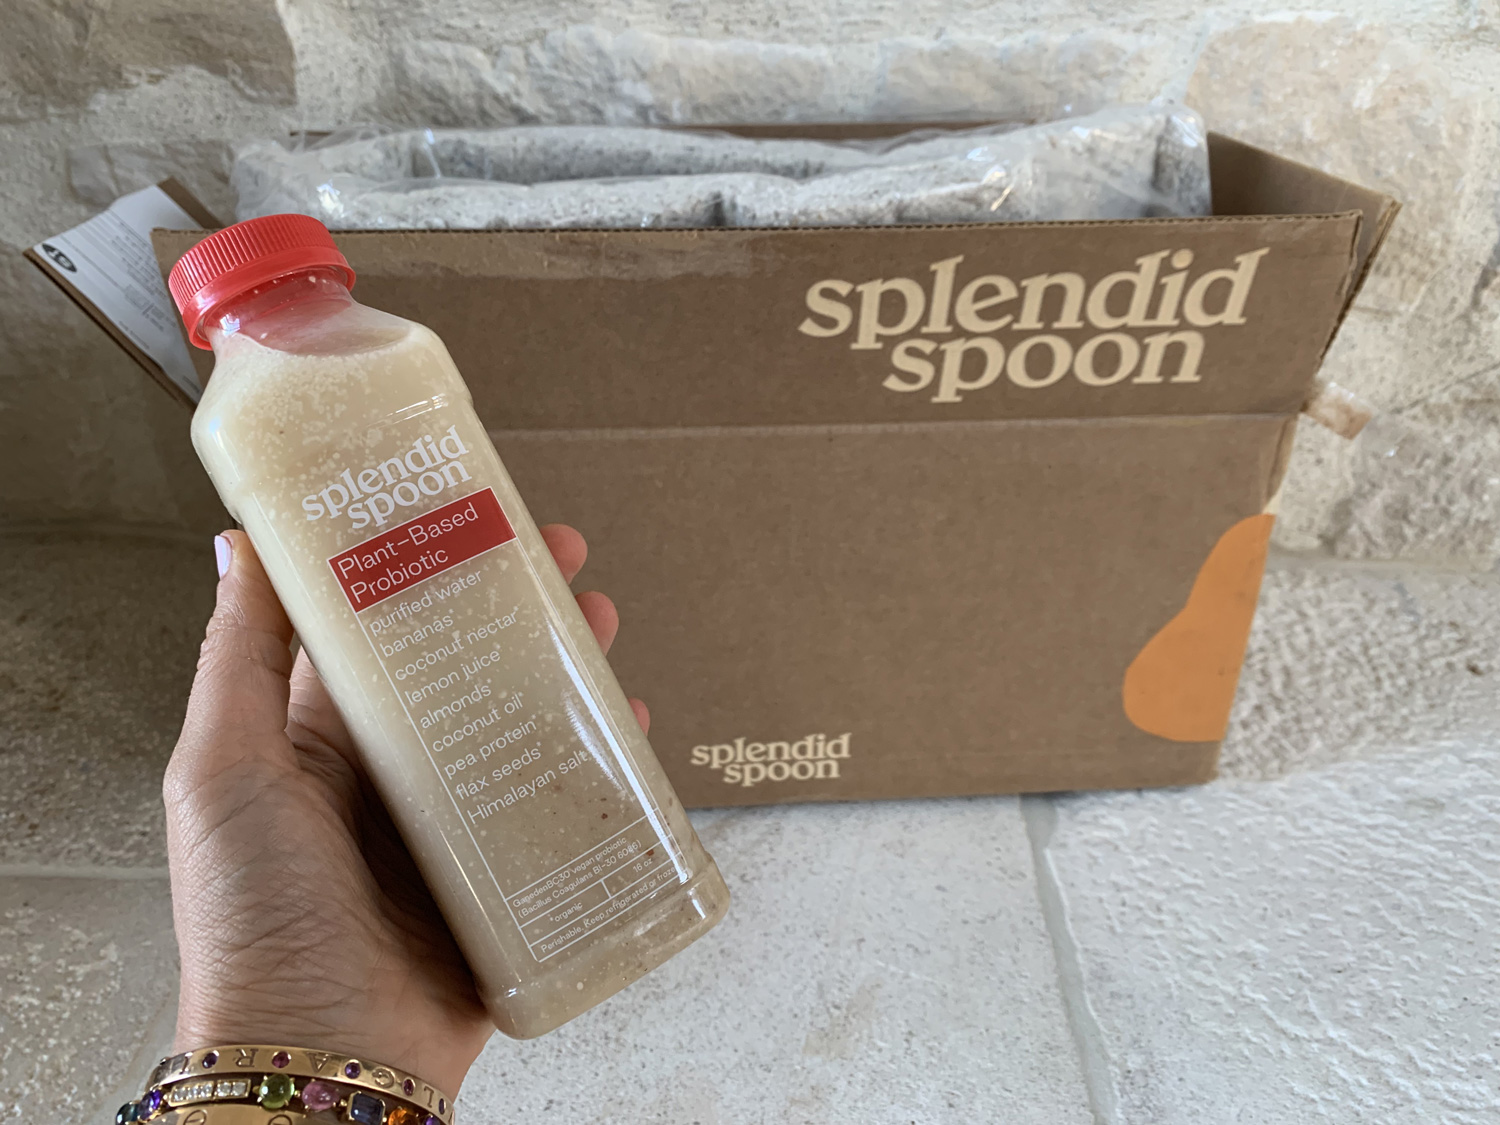 Splendid Spoon Smoothie Delivery